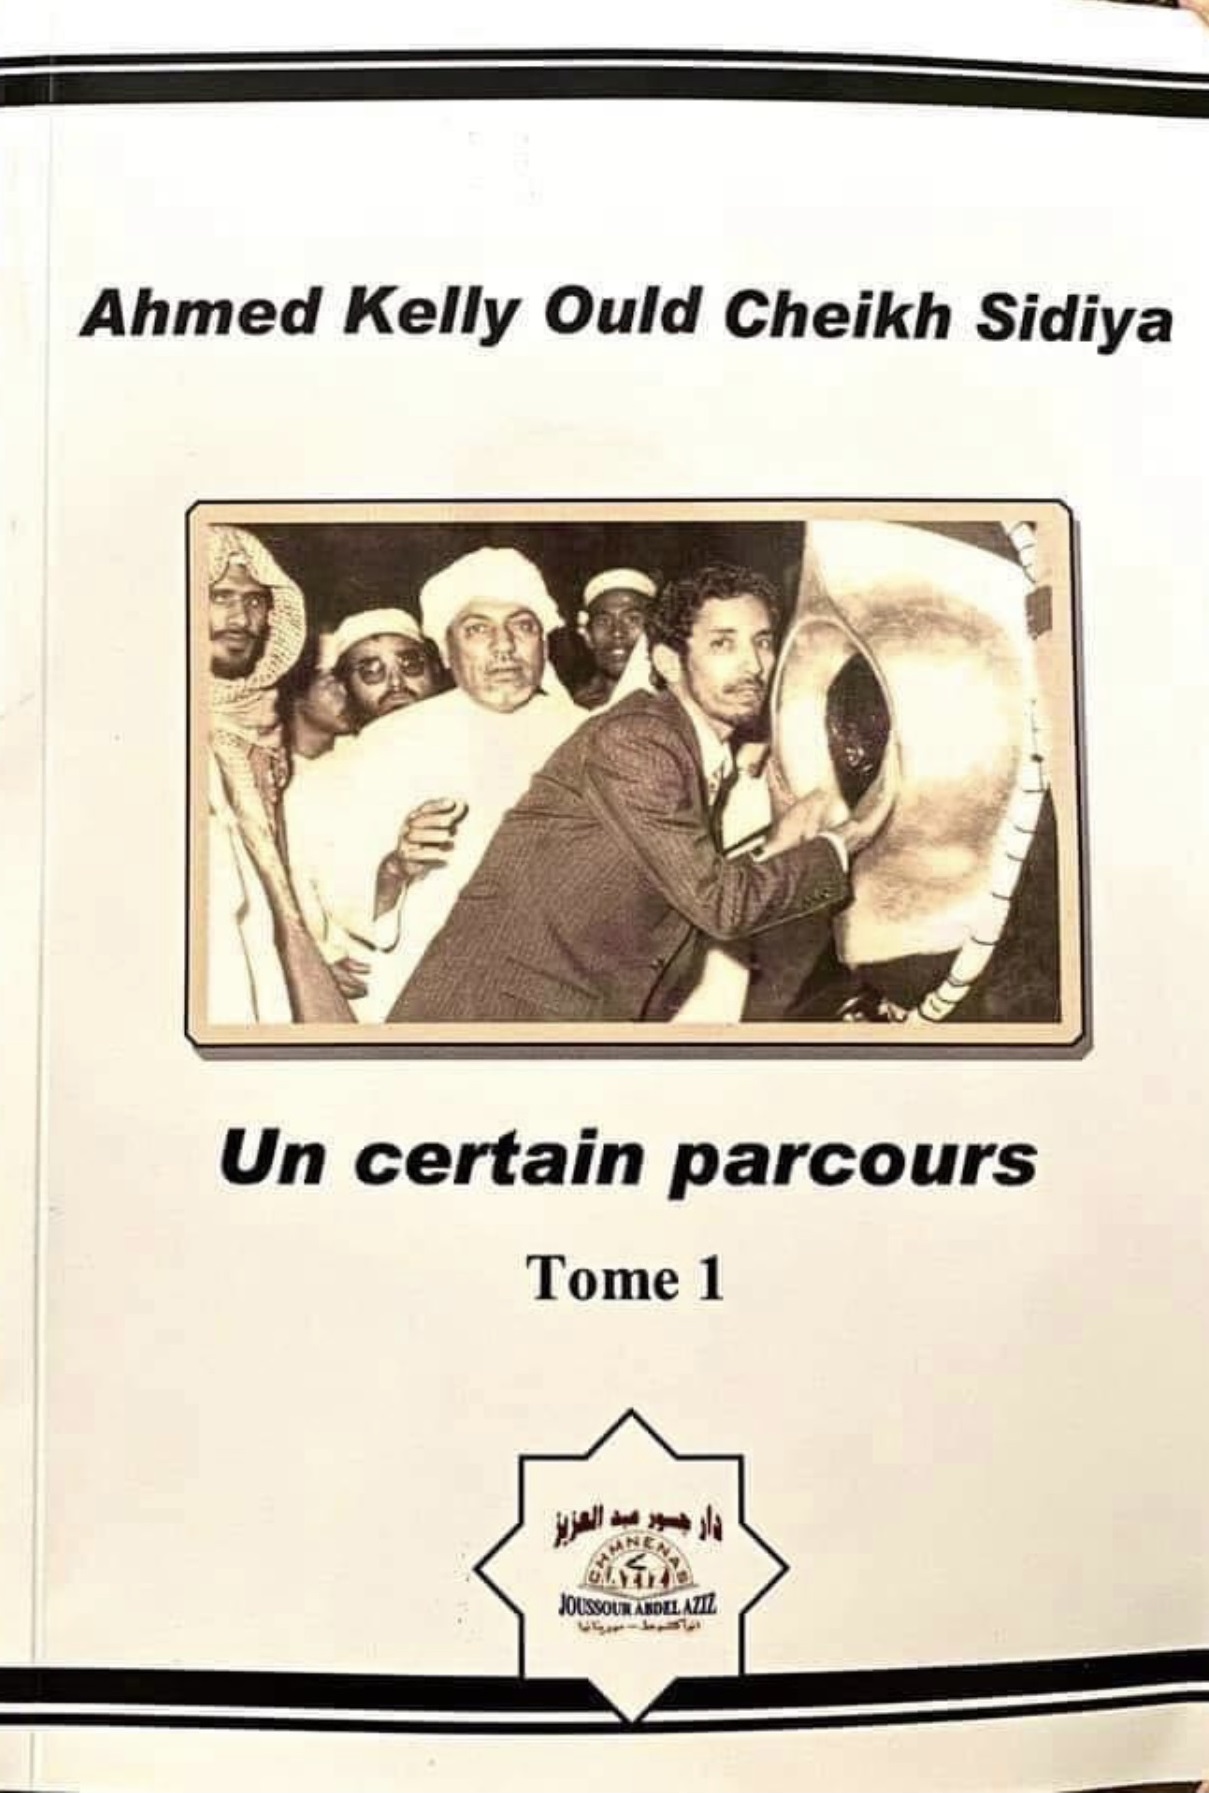 Les leçons d'un certain parcours d’Ahmed Kelly Ould Cheikh Sidiya.Par Abdelkader Ould Mohamed